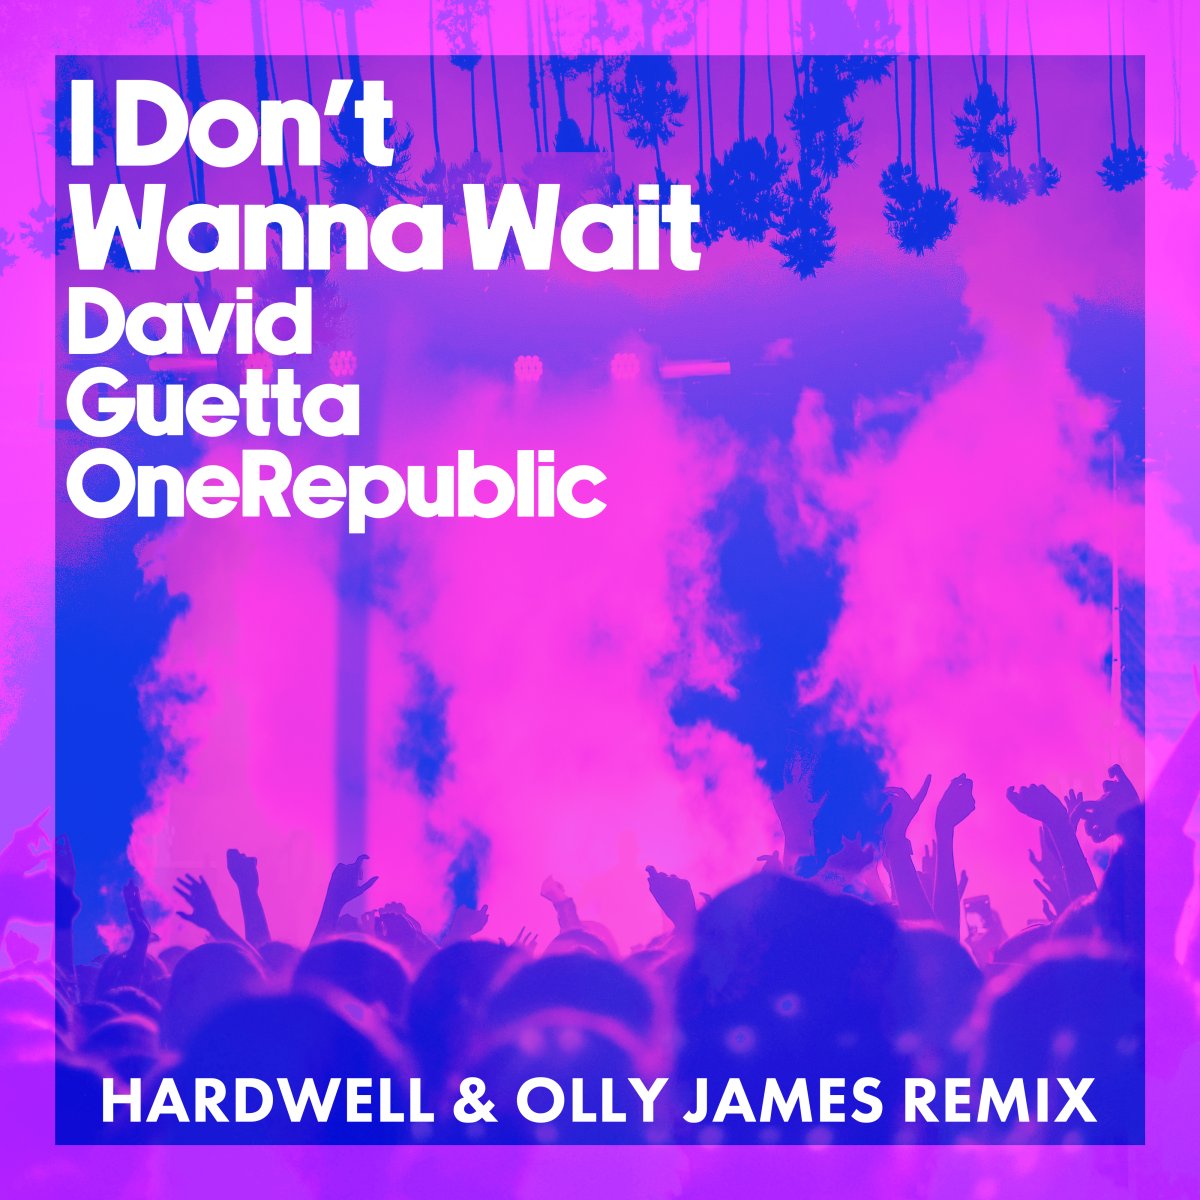 I Don't Wanna Wait (Hardwell & Olly James Remix) – David Guetta & OneRepublic & Hardwell & Olly James